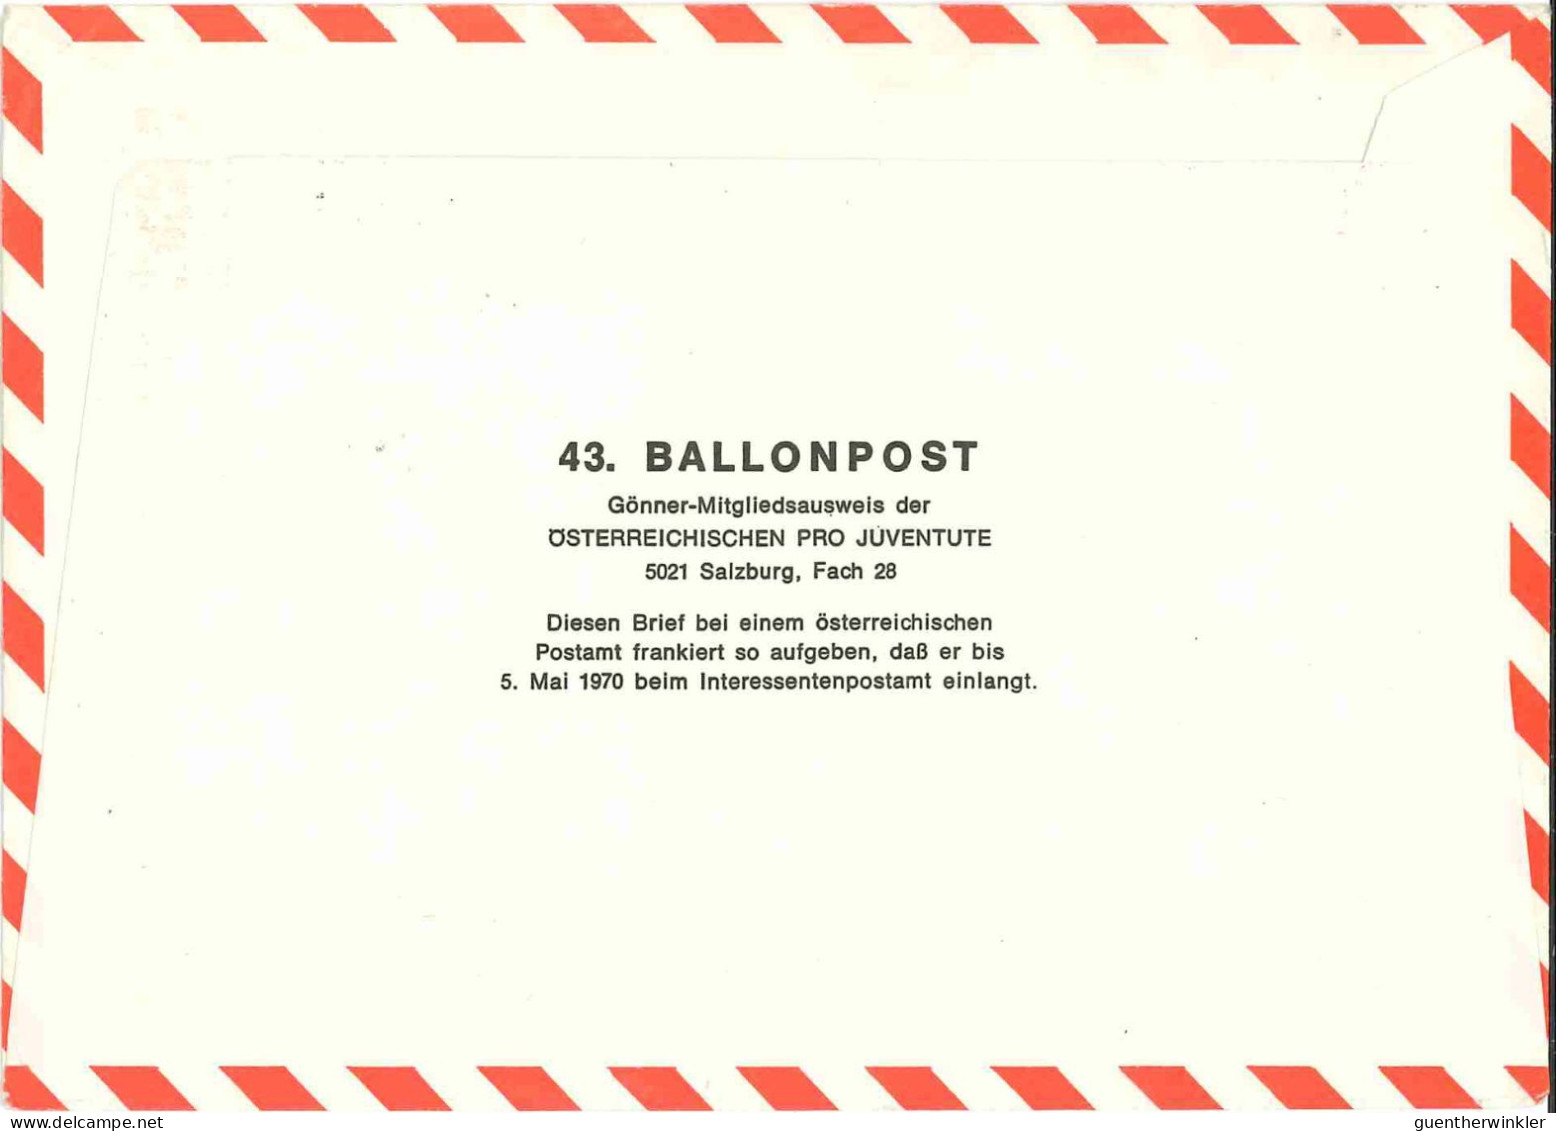 Regulärer Ballonpostflug Nr. 43a Der Pro Juventute [RBP43.] - Globos